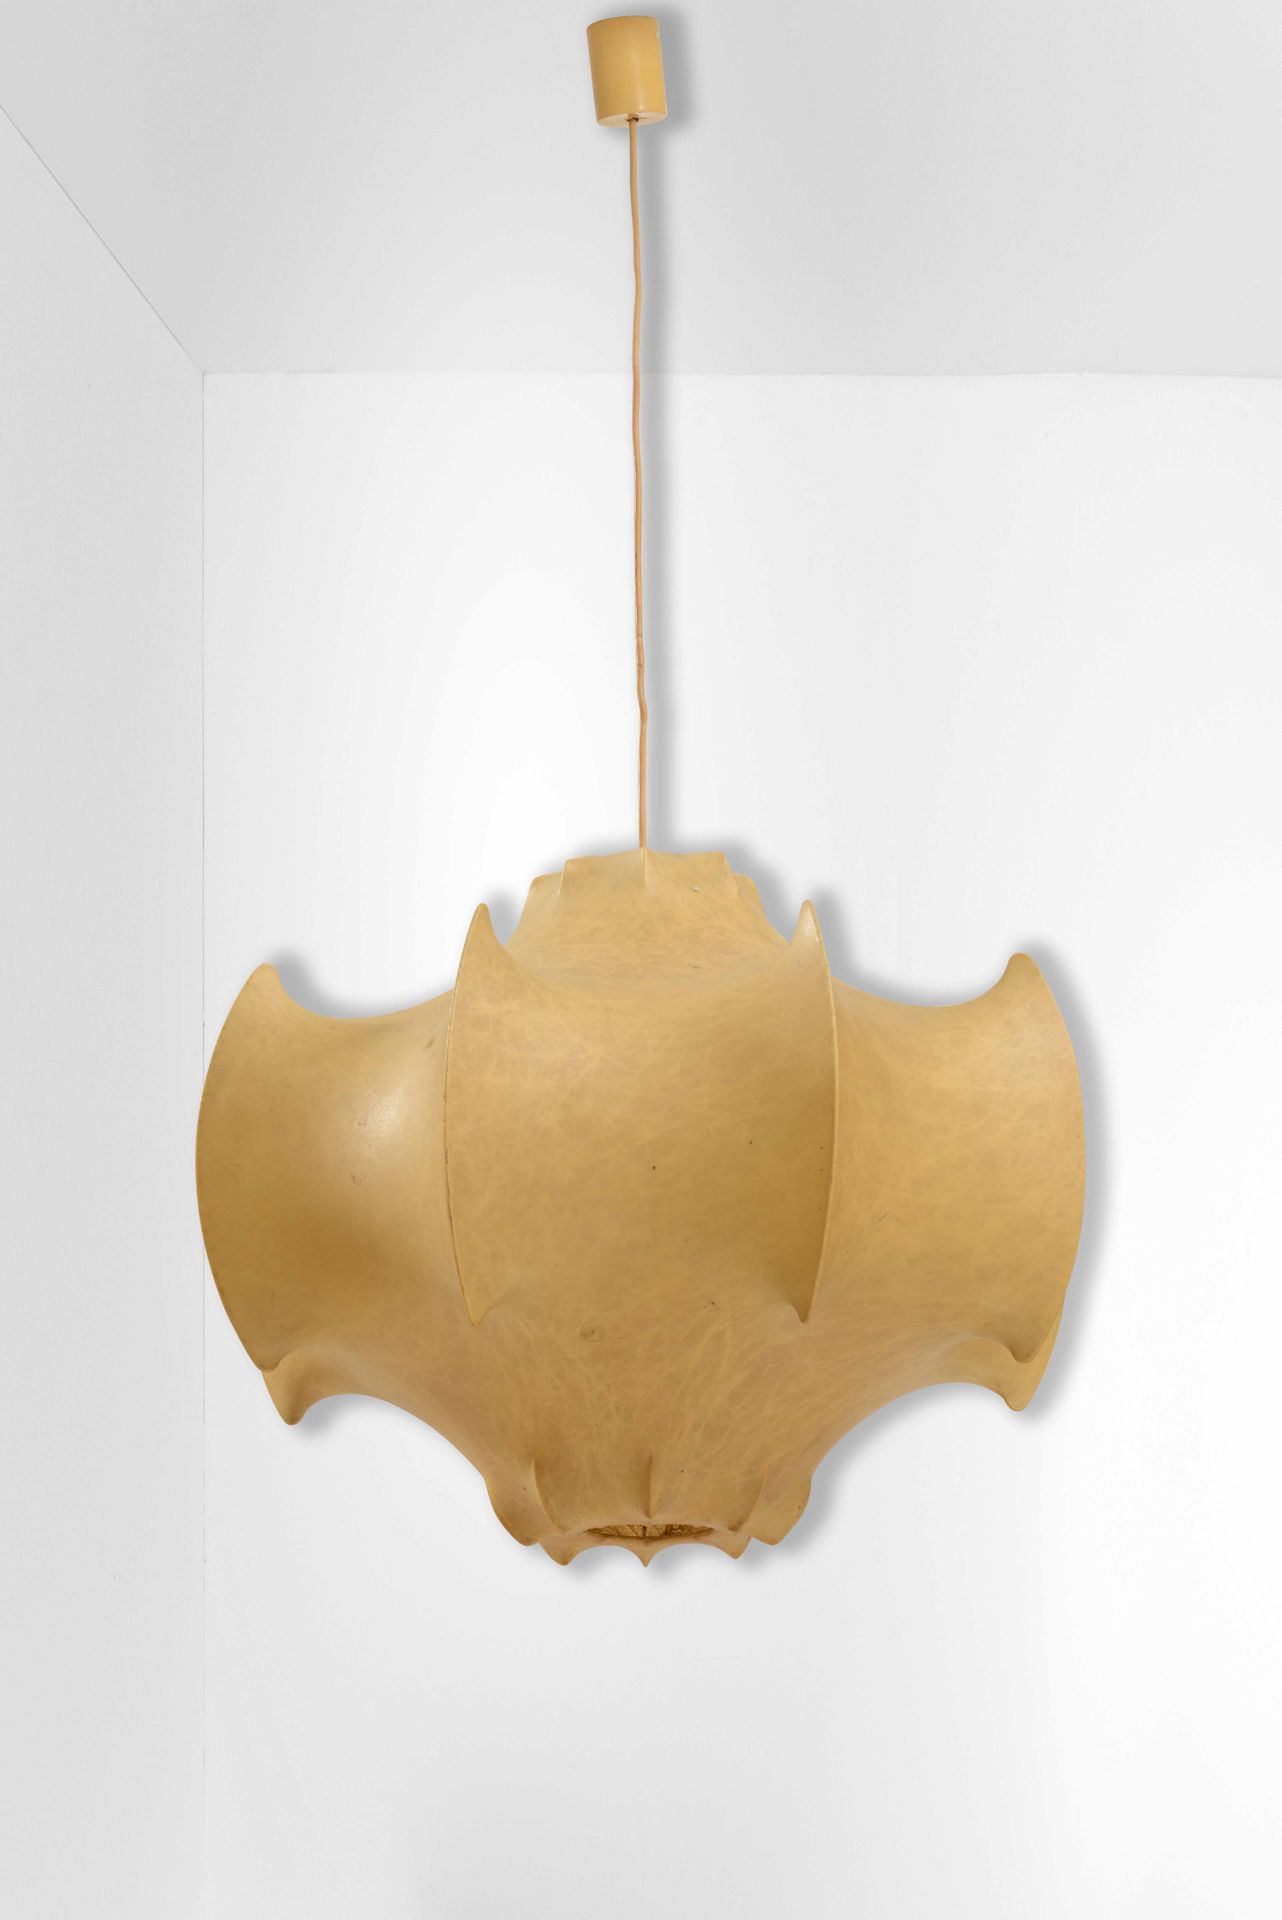 Achille Castiglioni, 吊灯mod.Taraxacum，金属结构和蚕茧覆盖。意大利Flos公司制造，约1960年，cm 70x110